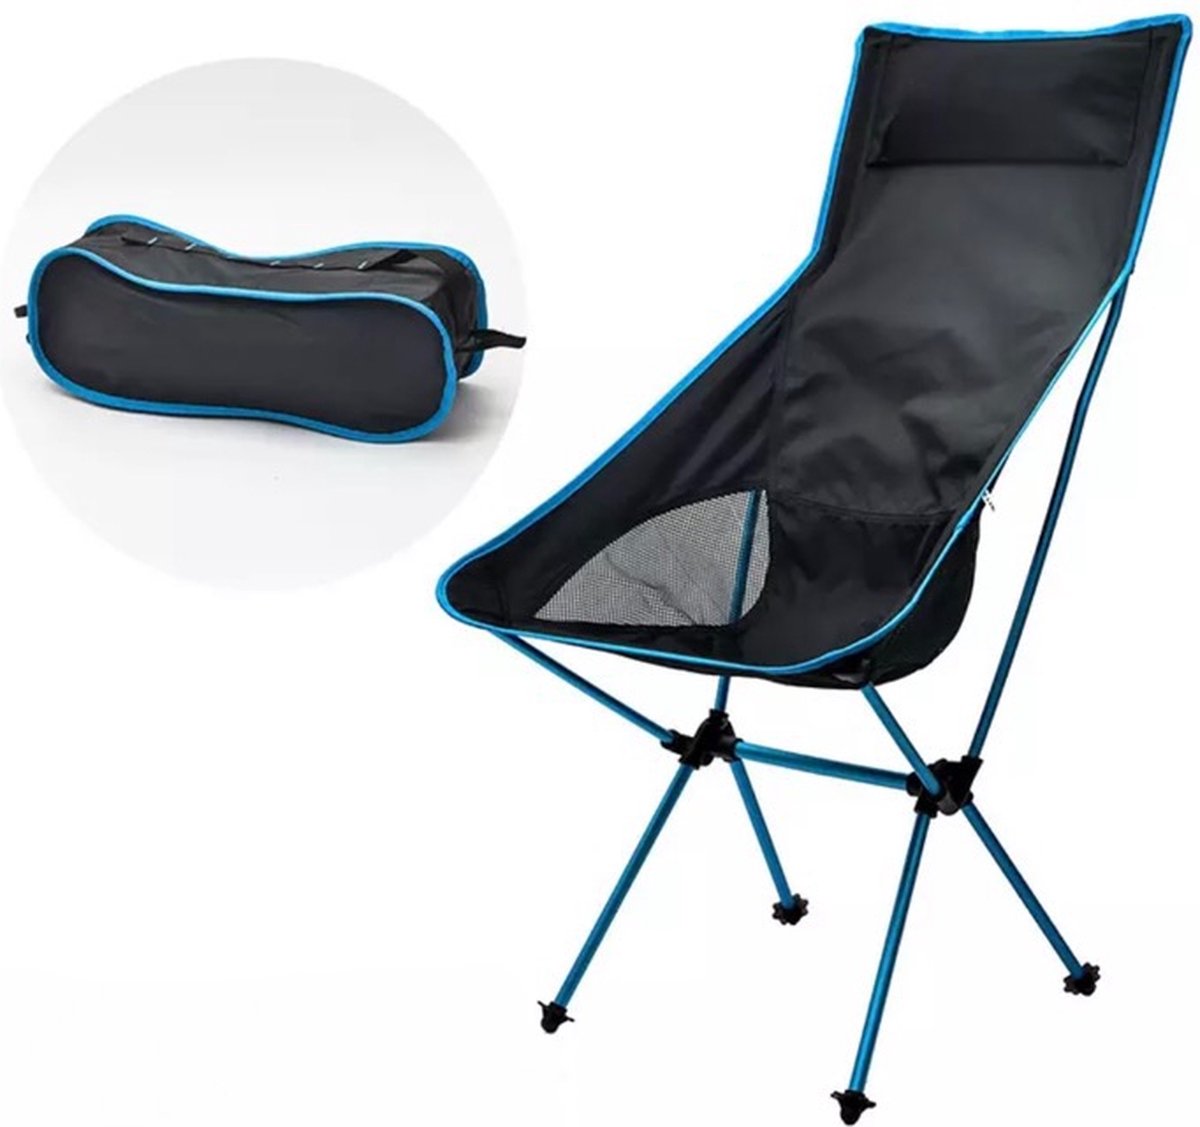 Strandstoel opvouwbaar met hoofdkussen - Kampeer vouwstoel - Karper/viskruk - Plooistoel - Ultralicht picknick meubel - Skyblue